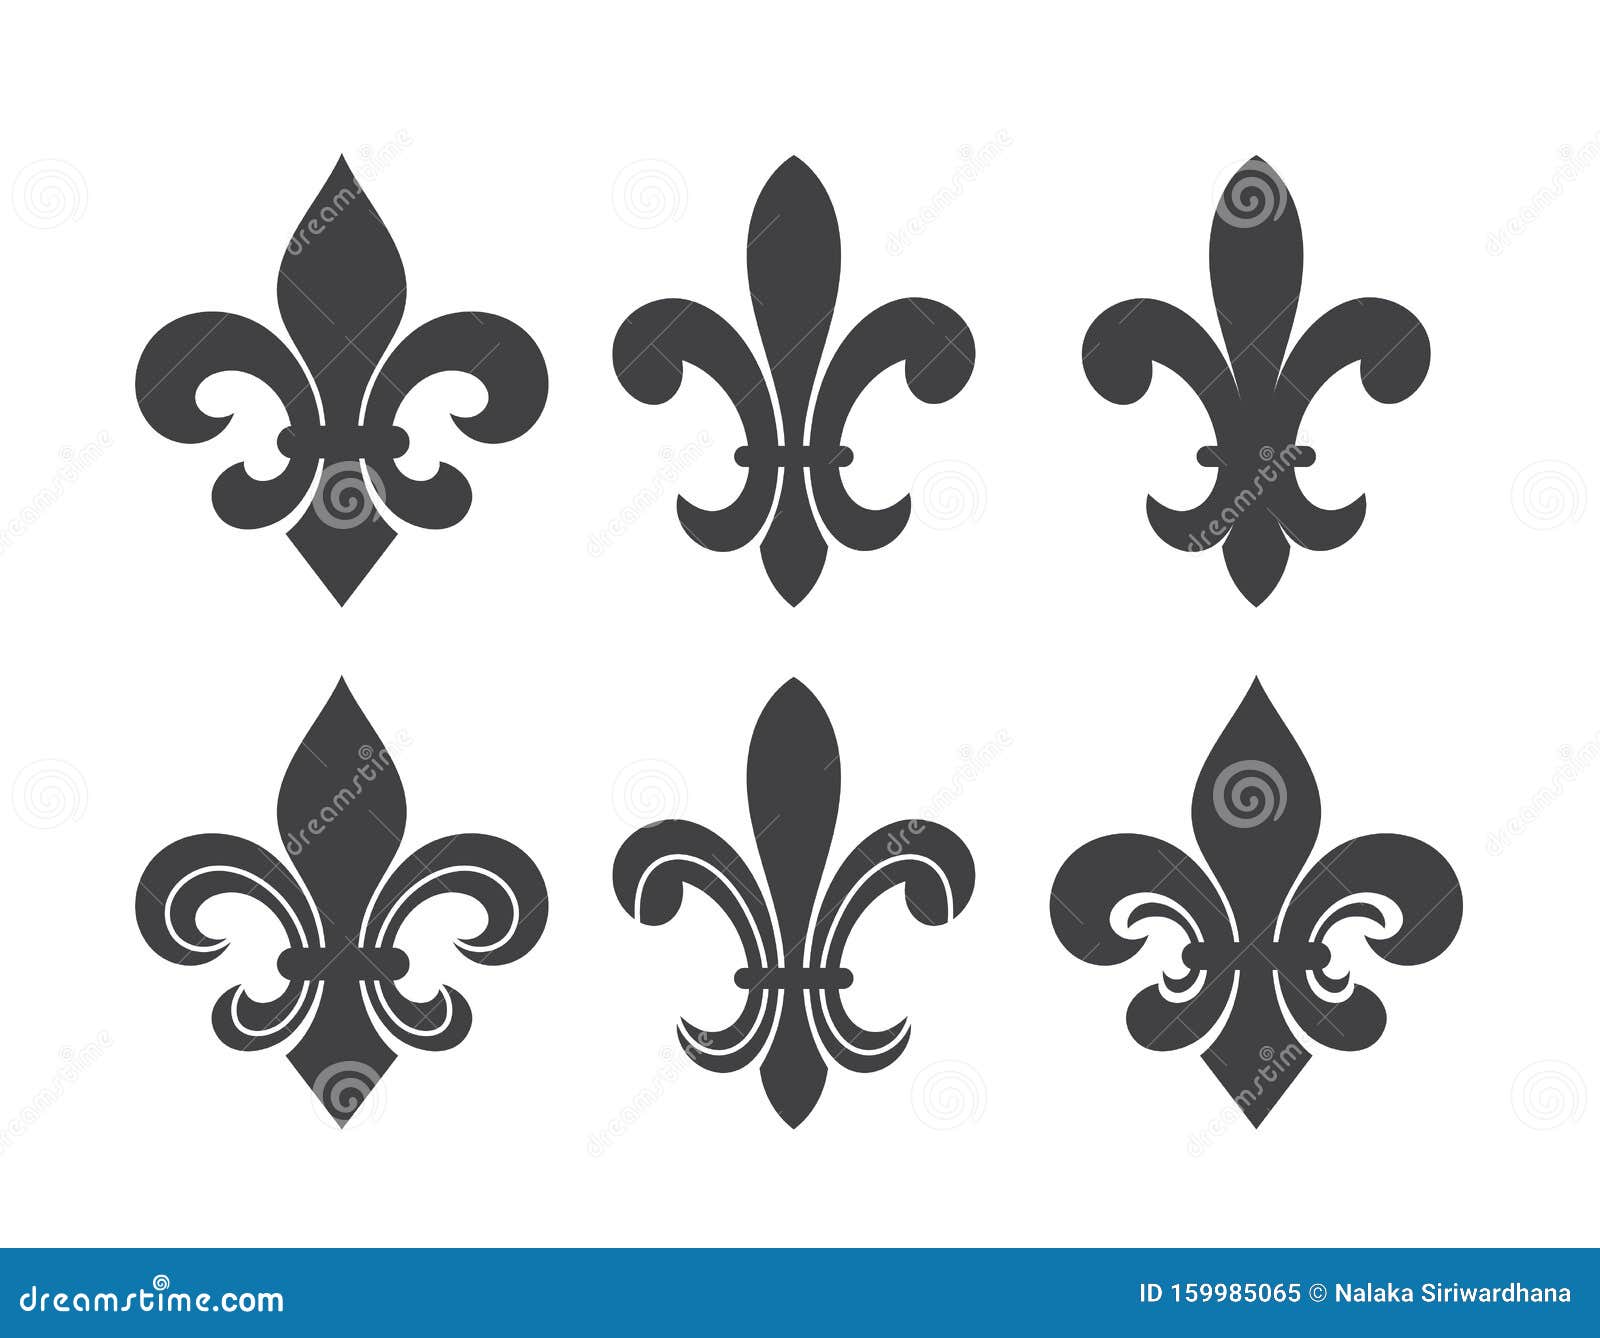 Ornate Fleur De Lis icon stock vector. Illustration of vector - 159985065